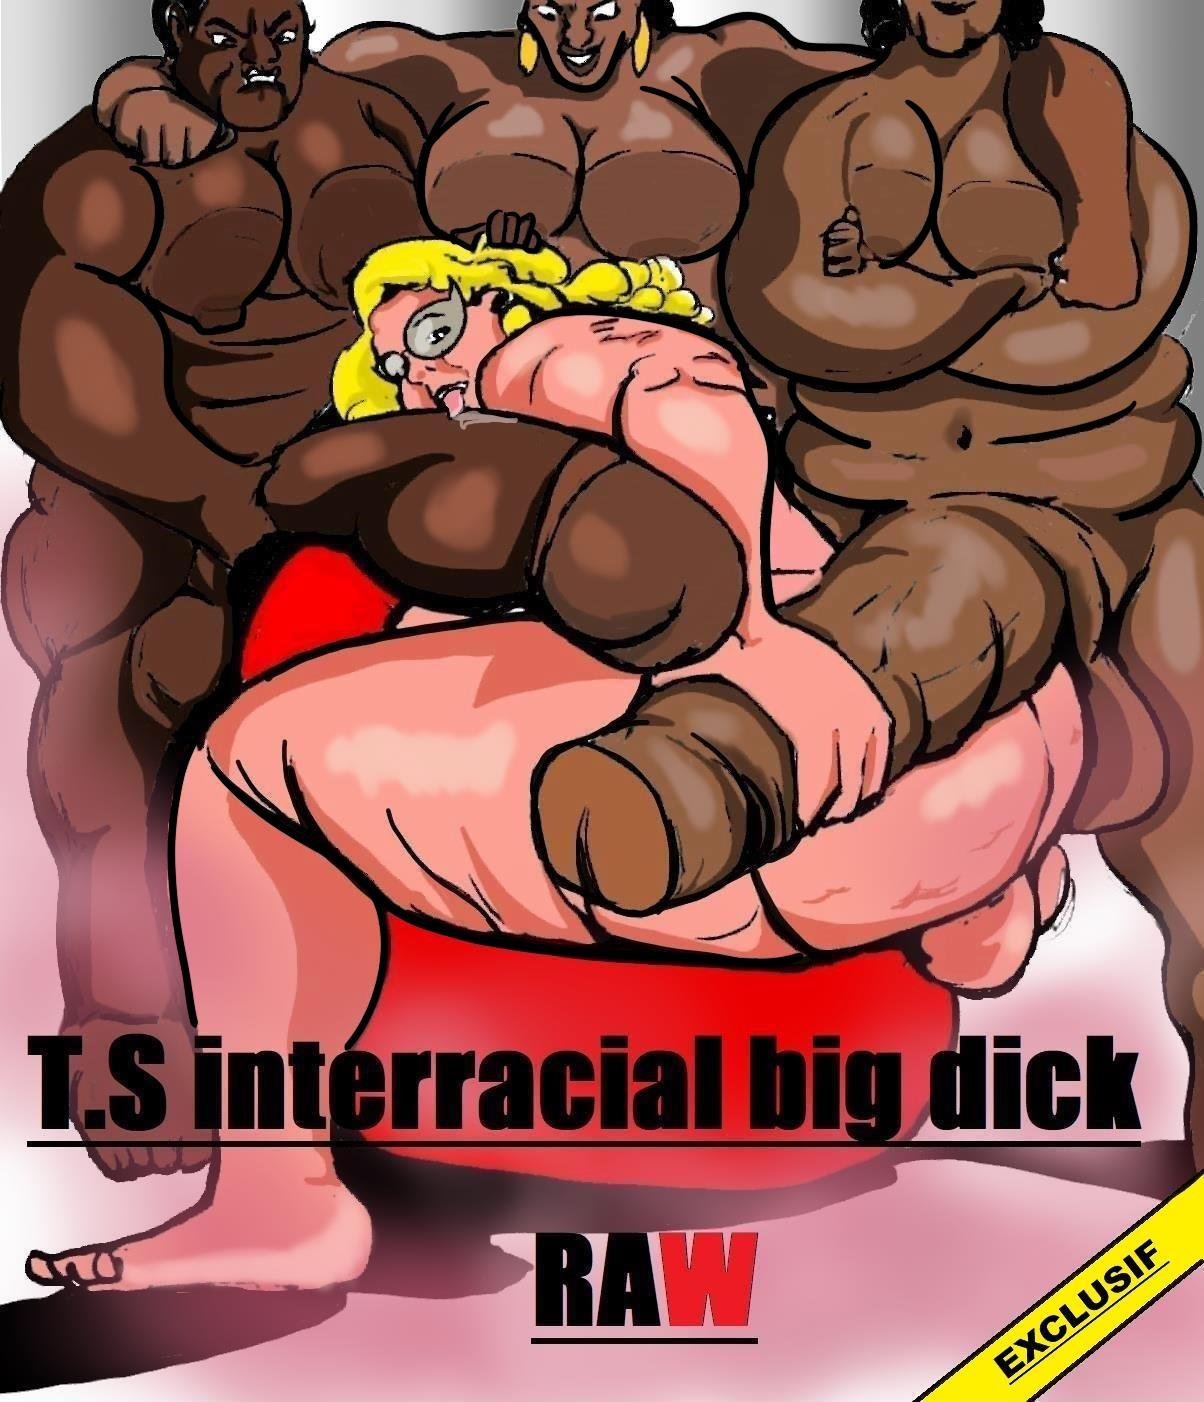 Dominated Shemale Cartoon - T.S Interracial big dick RAW Â» Porn comics free online